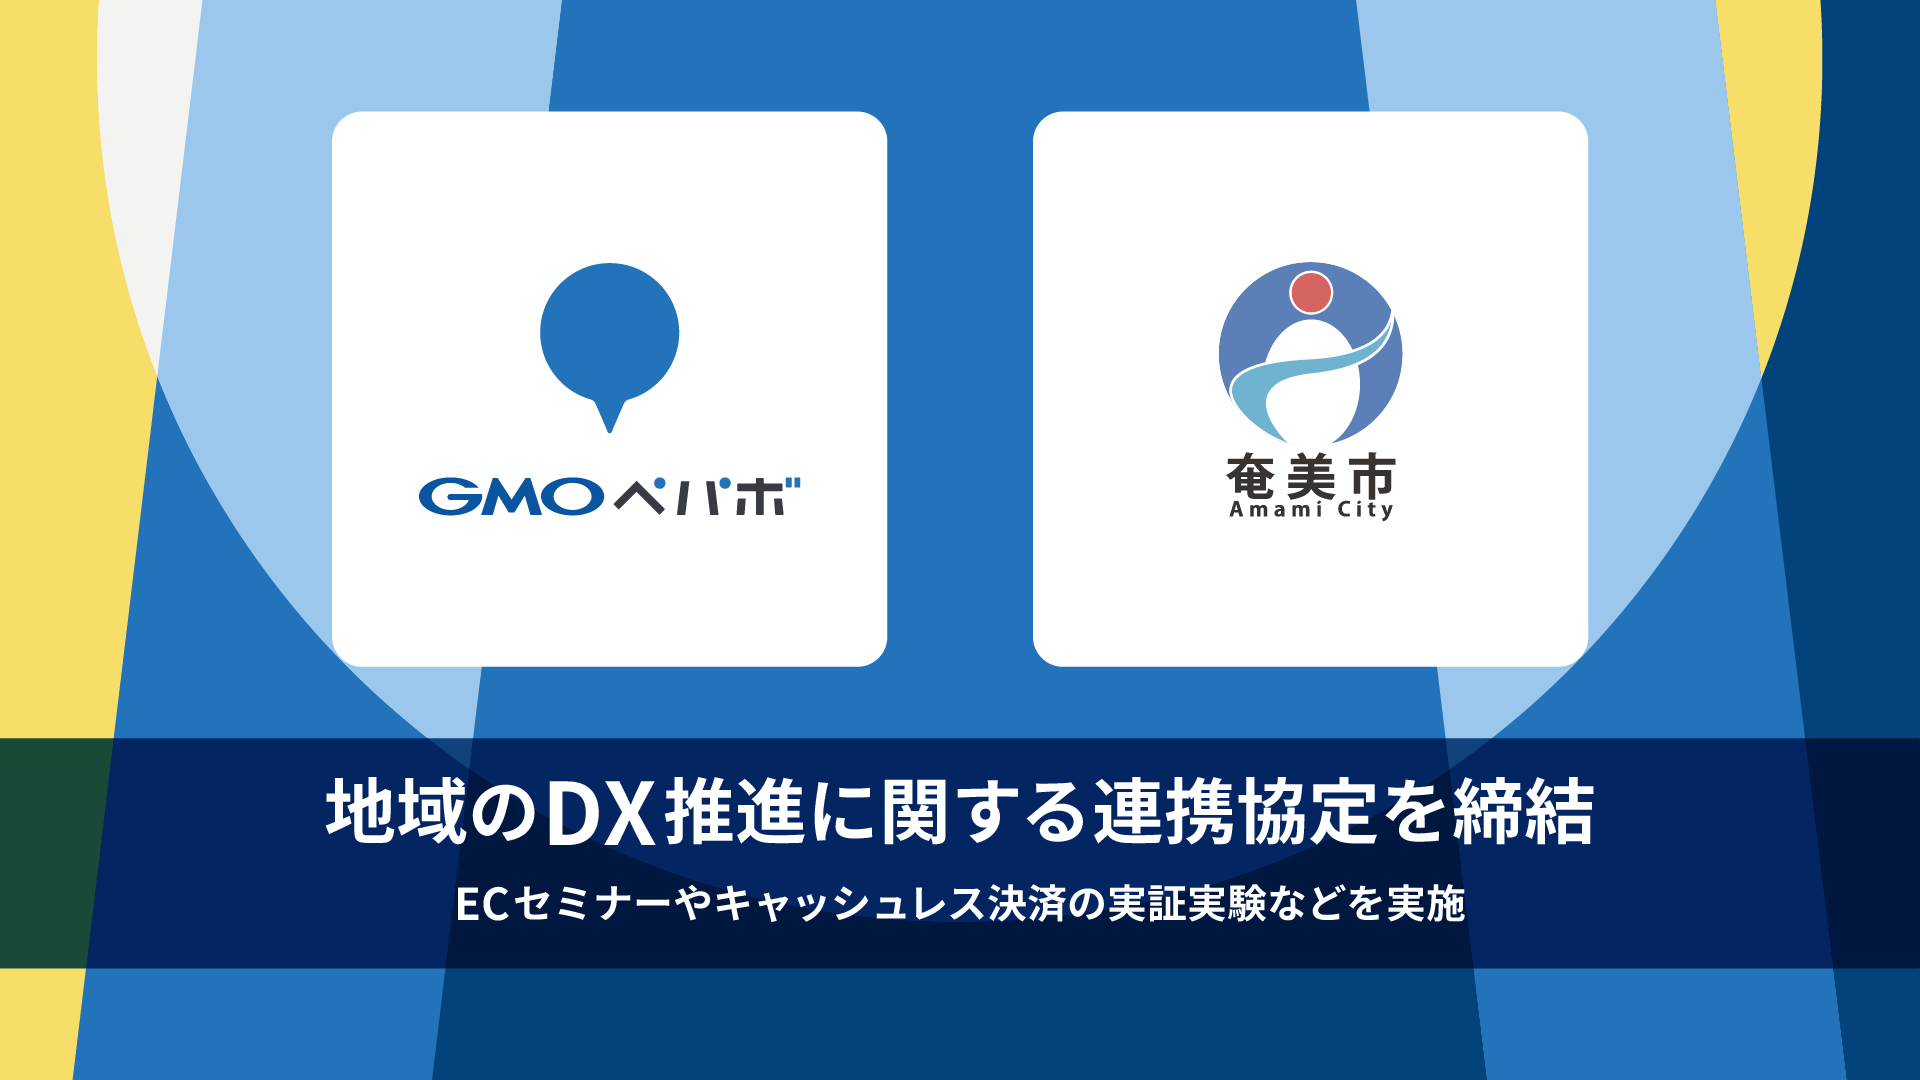 GMOペパボが、鹿児島県奄美市と地域のDX推進に関する連携協定を締結 ECセミナーやキャッシュレス決済の実証実験などを実施